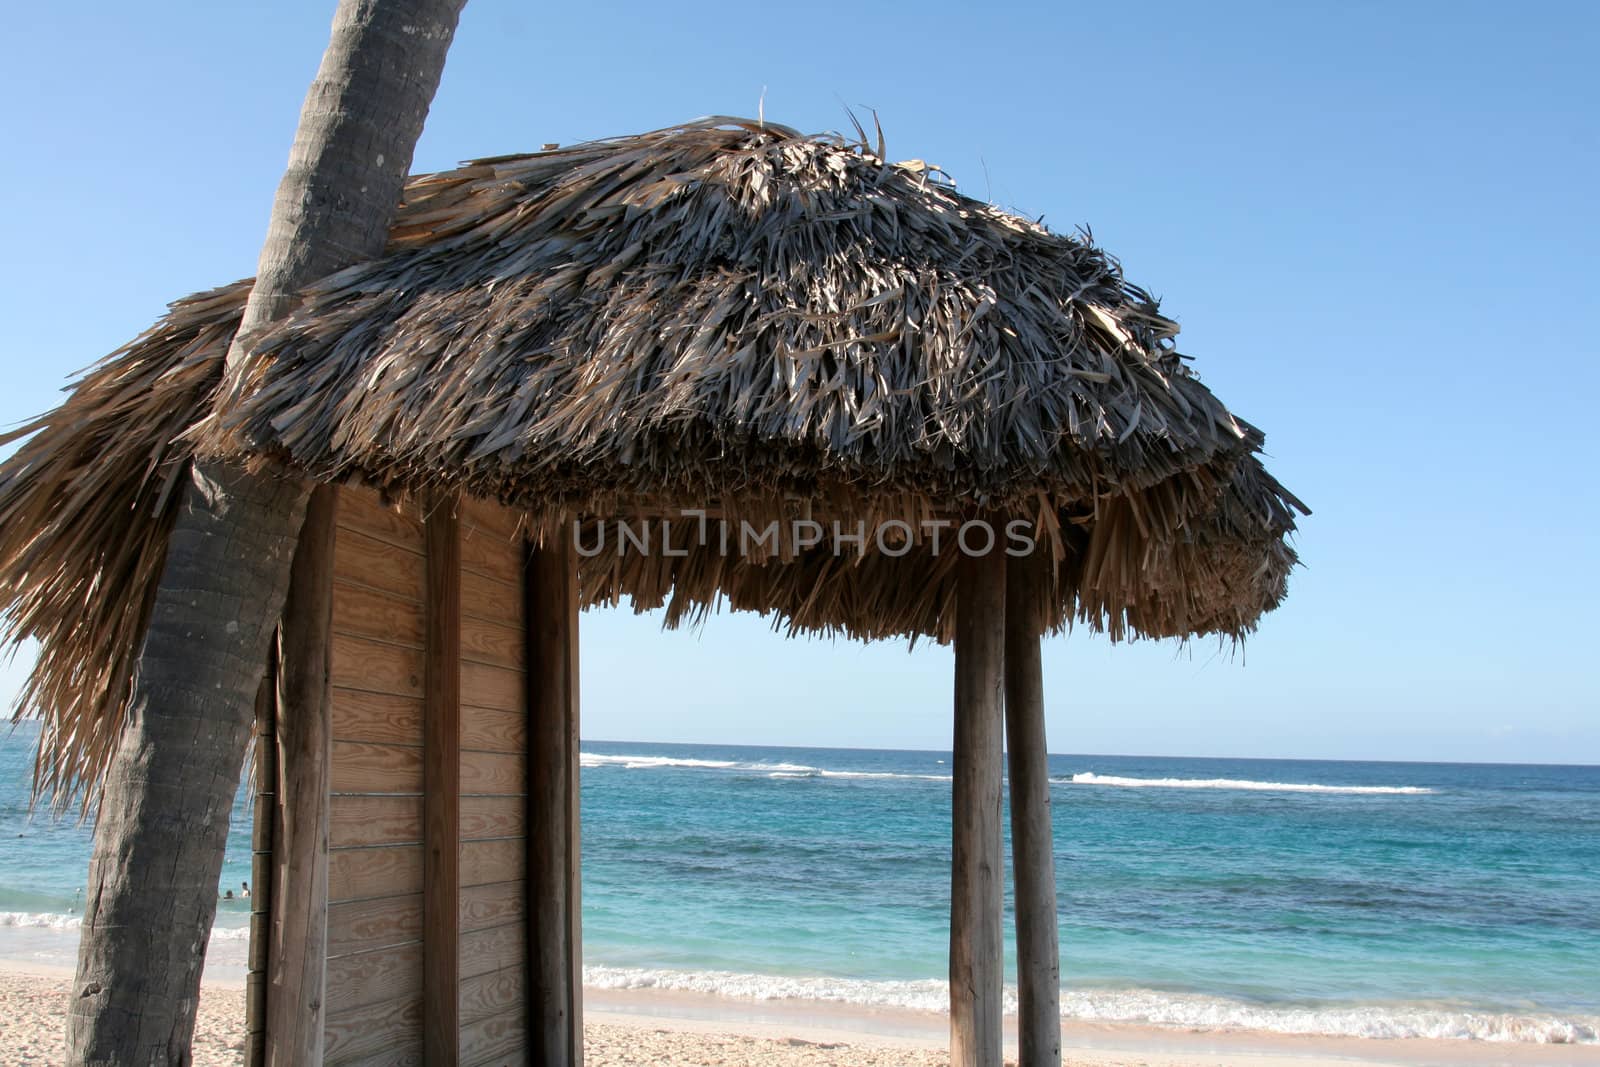 A lonely beach hut on a beautiful beach.